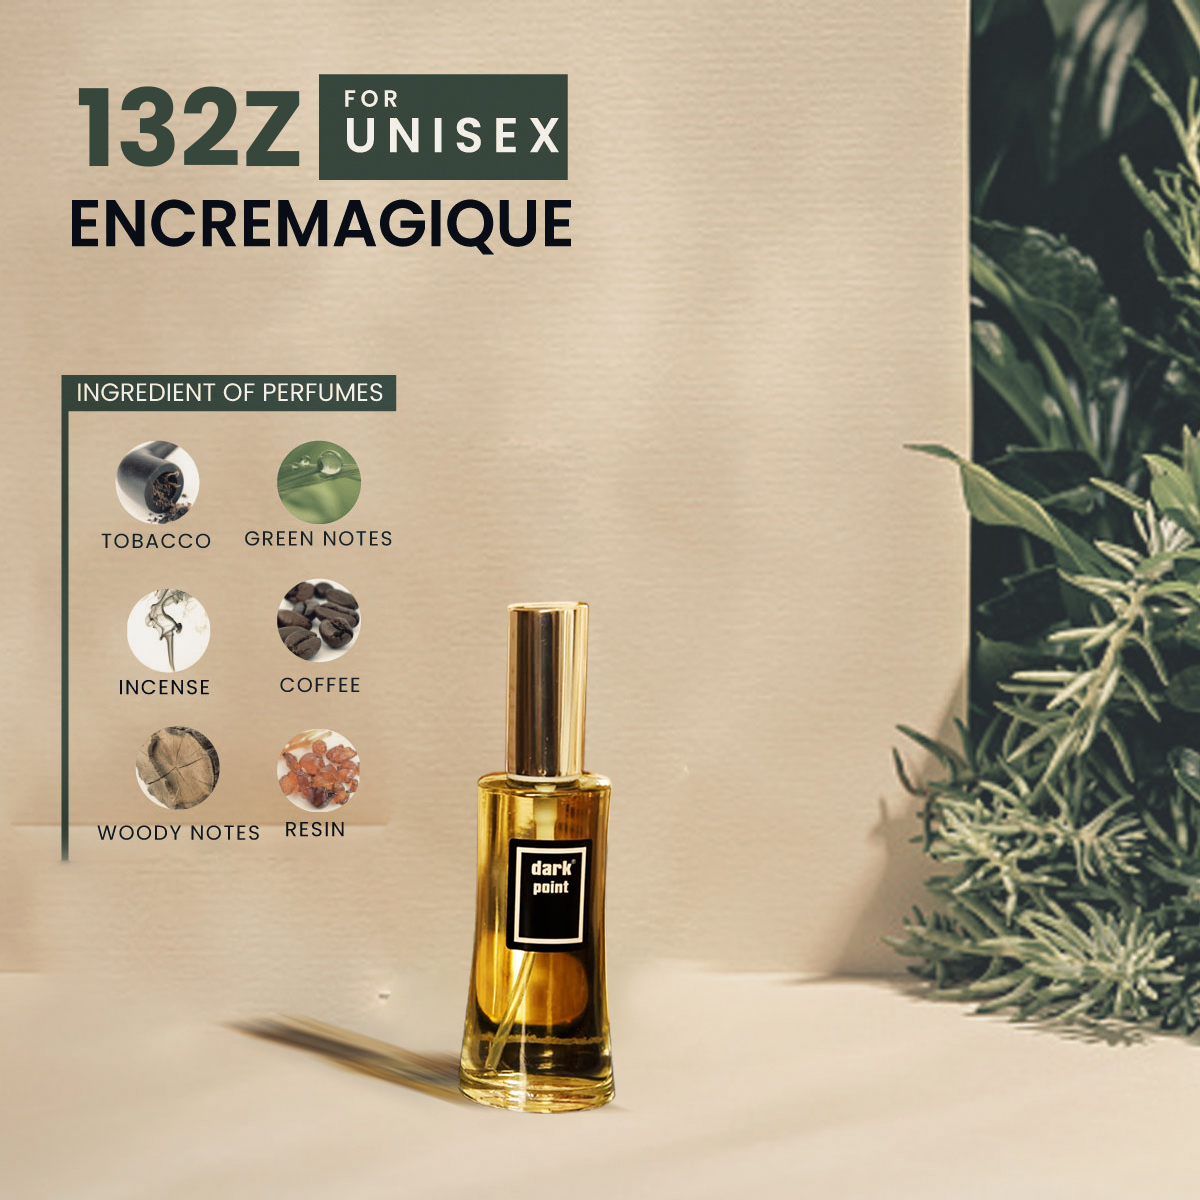  Fragrance World – Extreme Aoud Edp 100ml Unisex perfume, Aromatic Signature Note Perfumes For Men & Women